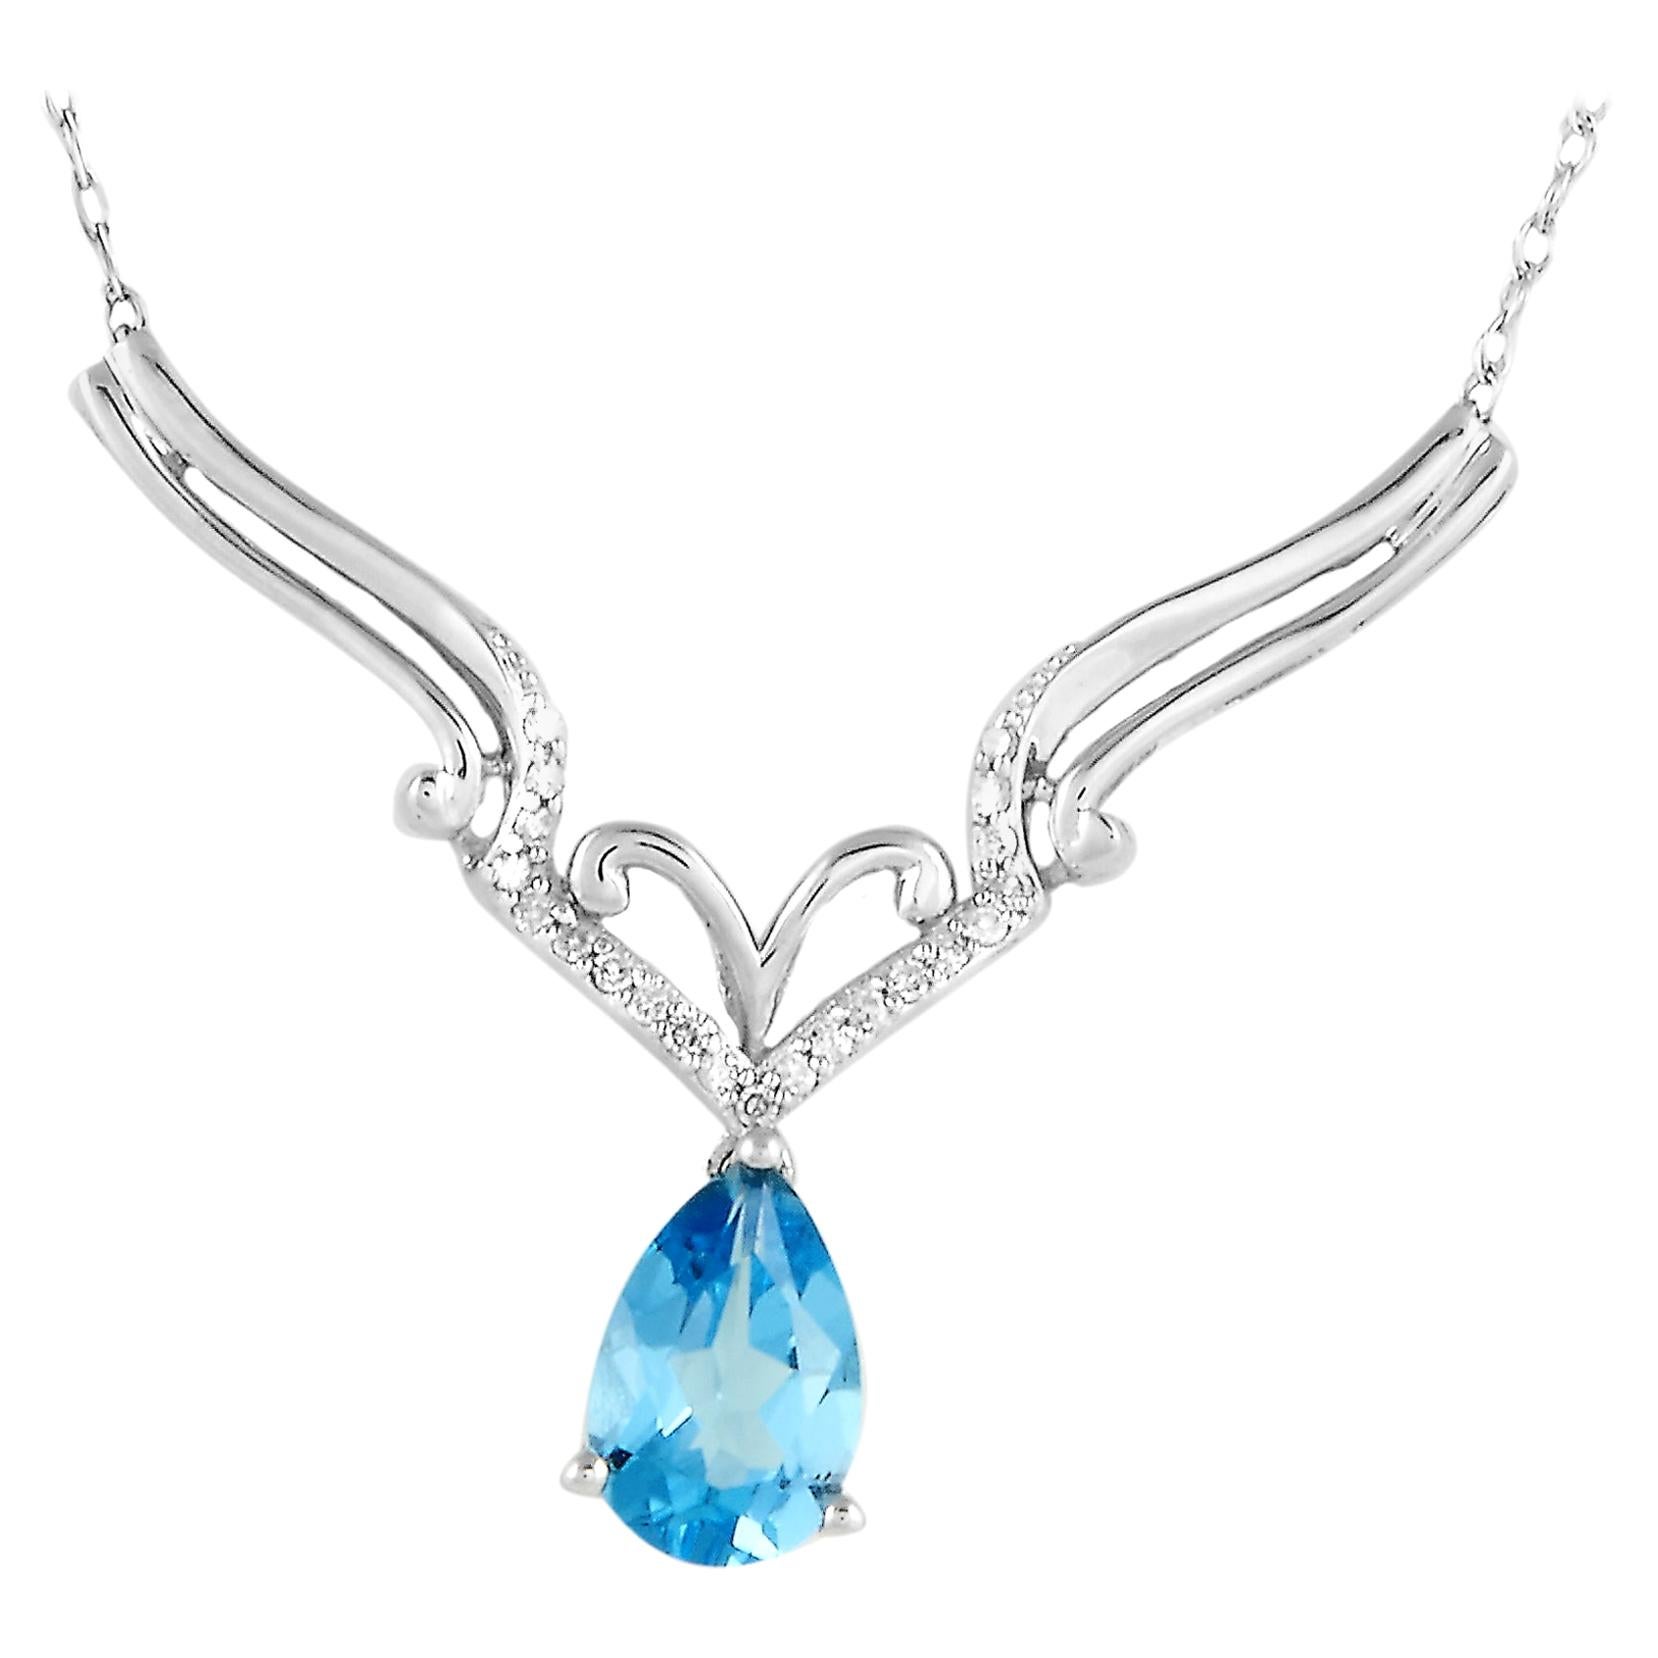 LB Exclusive 14K White Gold 0.10 Carat Diamond and Blue Topaz Pendant Necklace